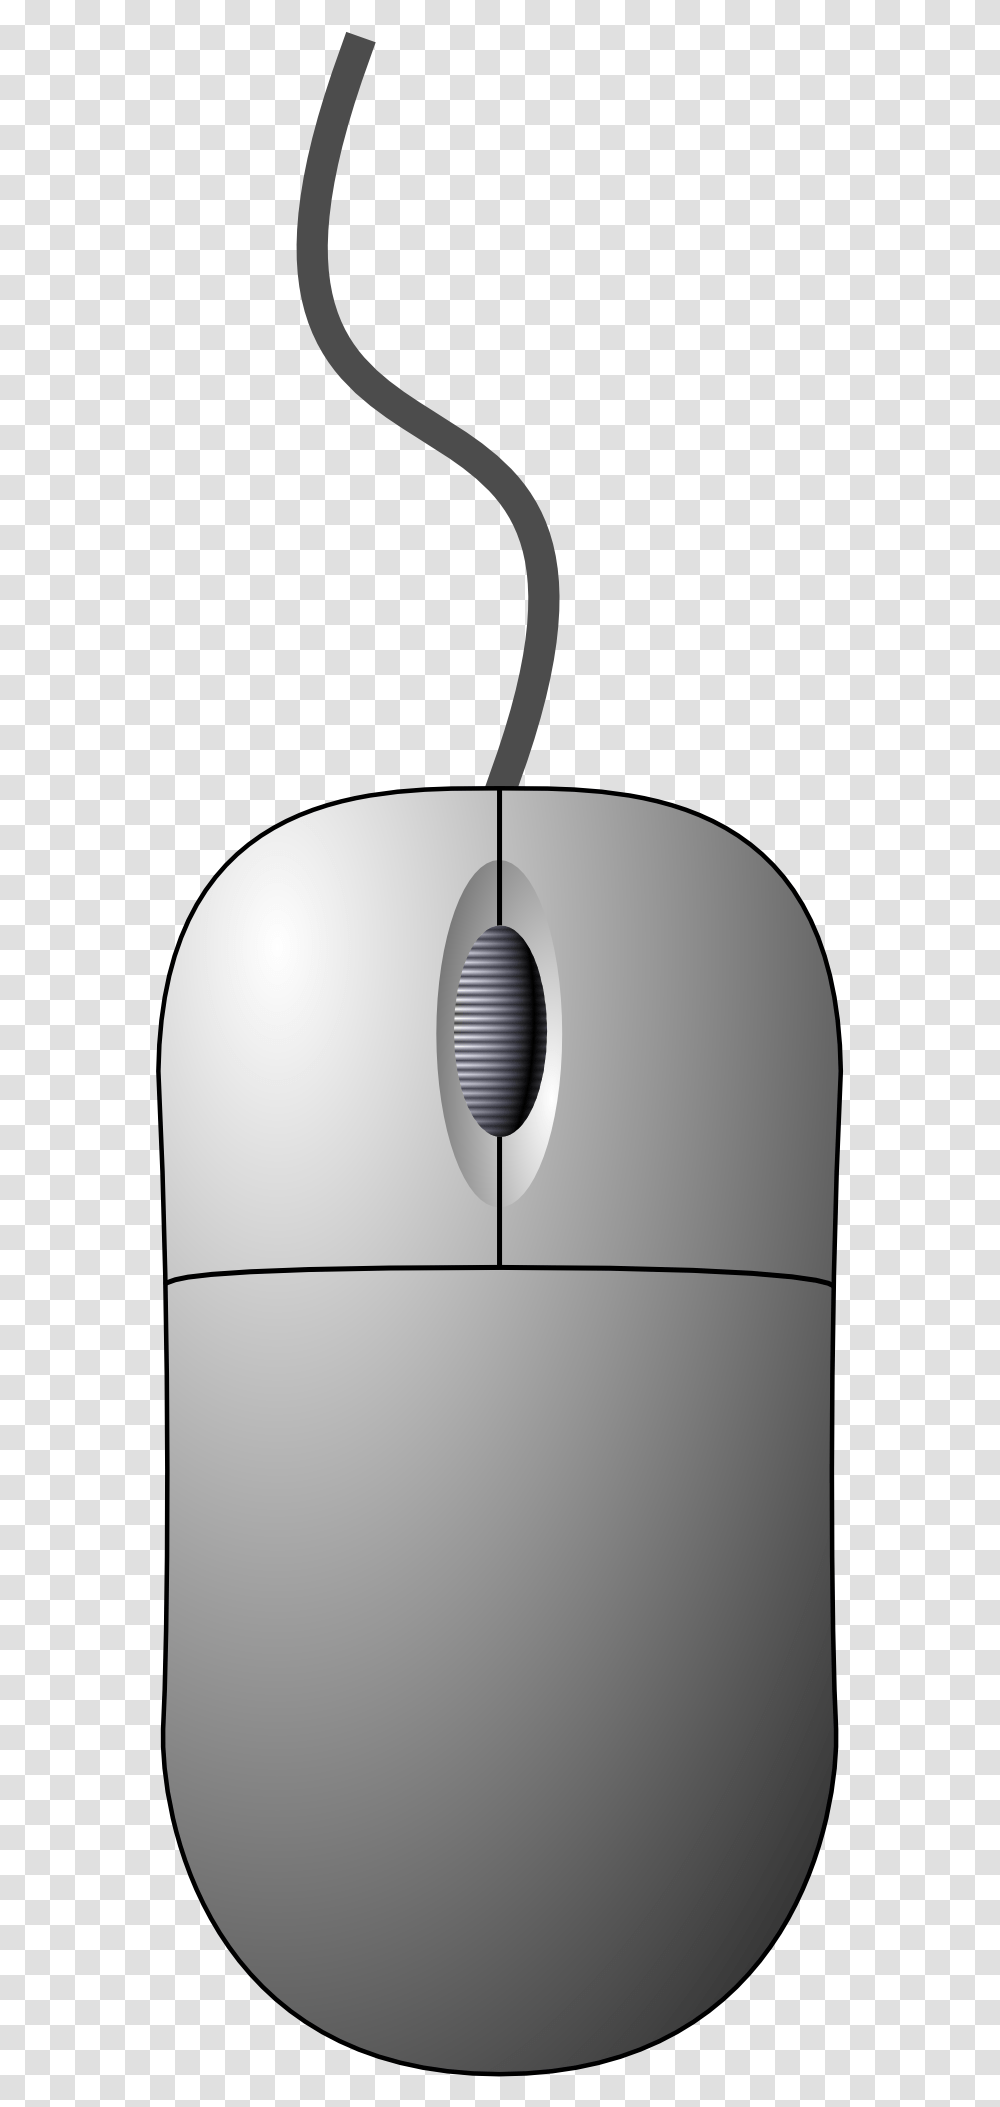 Pc Mouse Image Computer Mouse Clip Art, Electronics, Hardware, Lamp Transparent Png